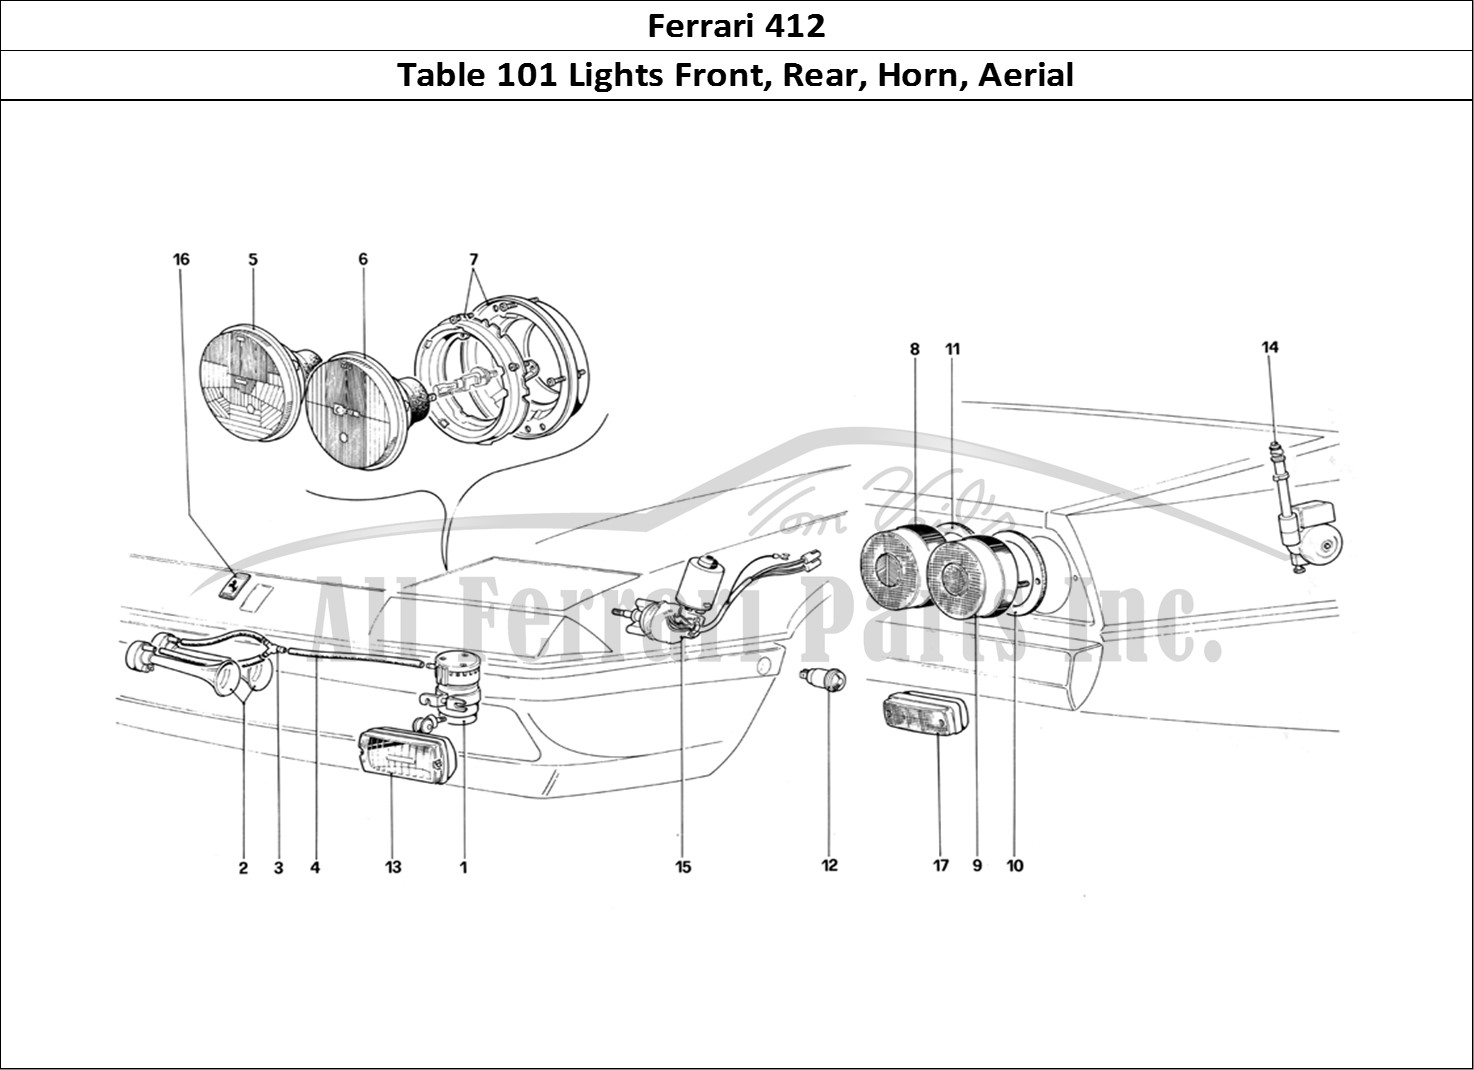 Ferrari Parts Ferrari 412 (Mechanical) Page 101 Front and Rear Lights - H